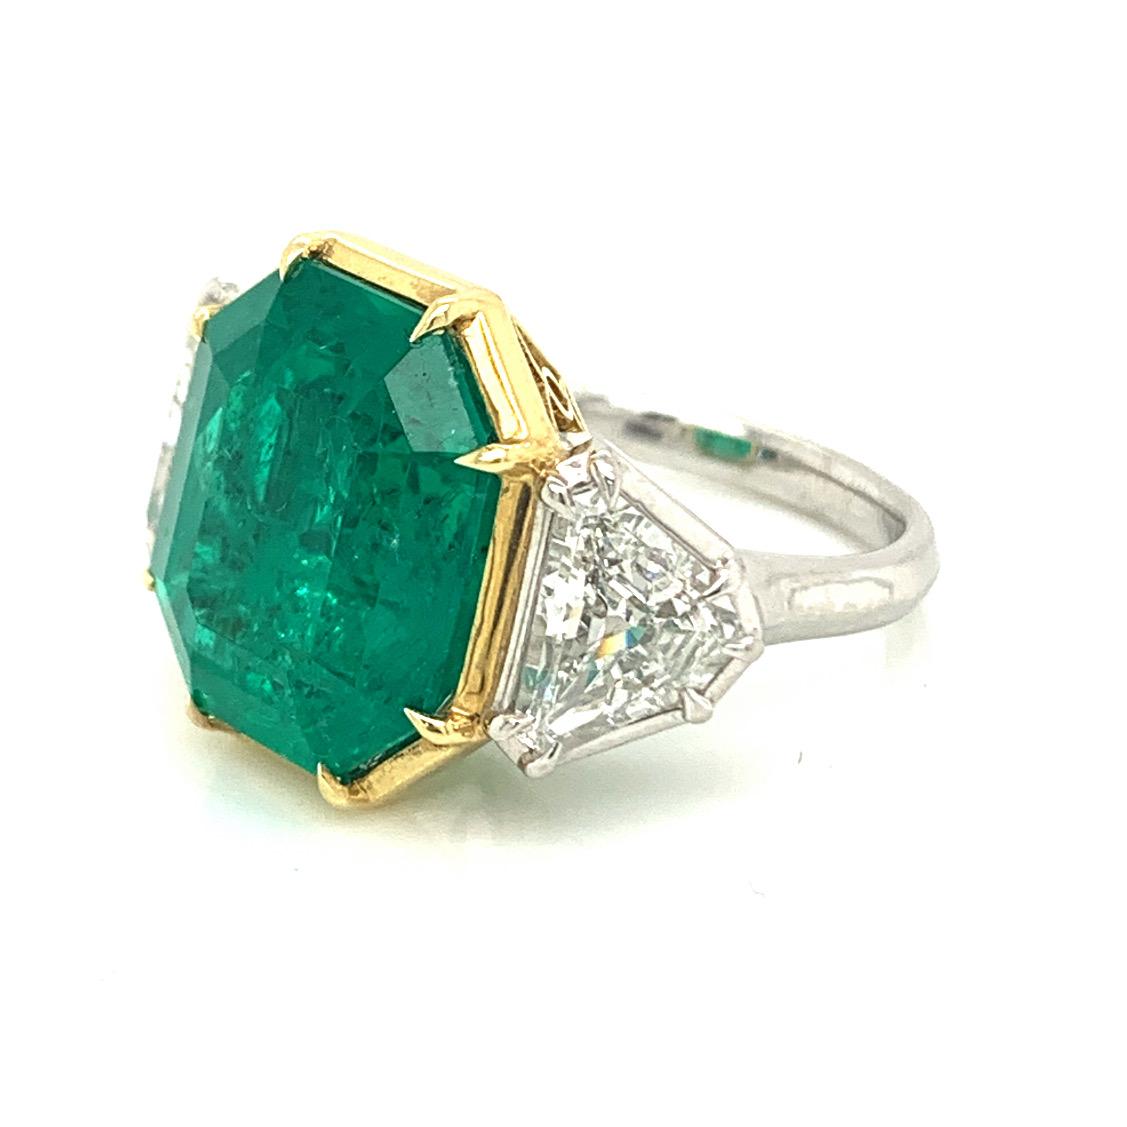 10 carat colombian emerald price